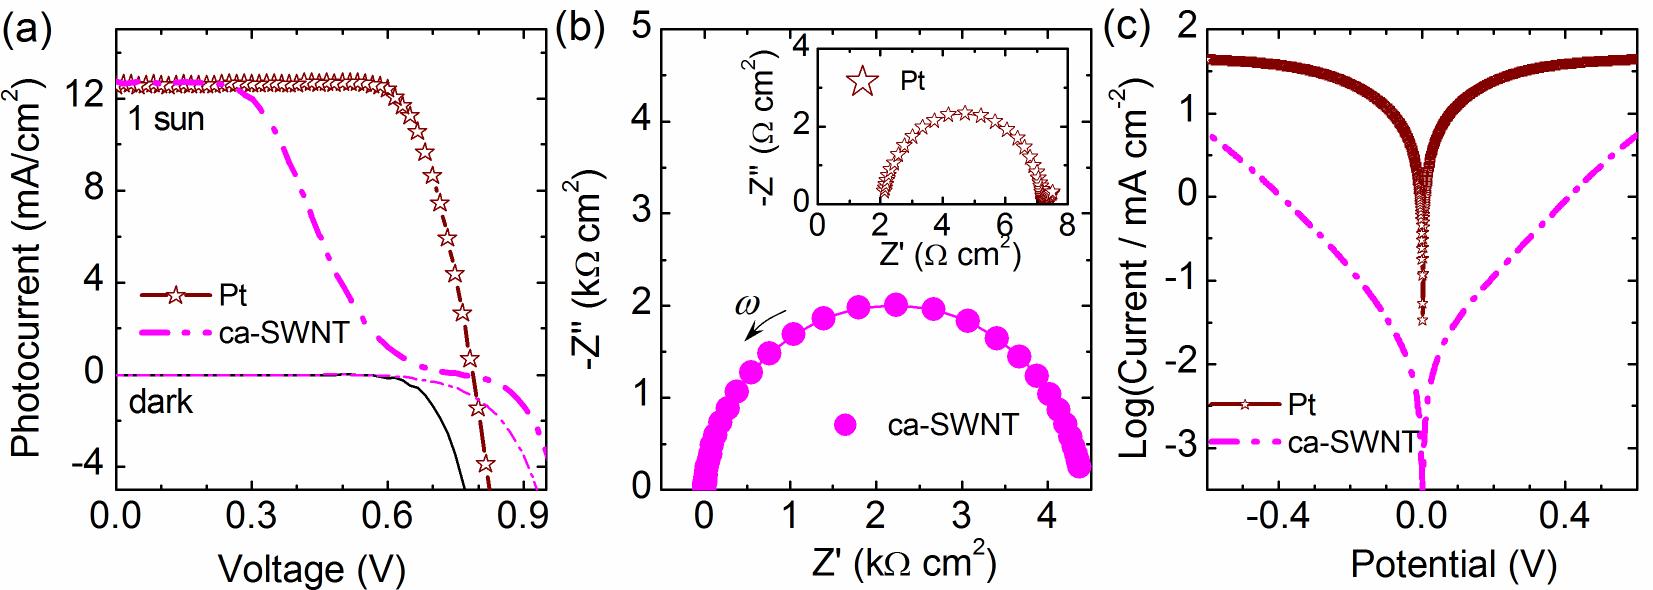 (a) I-/I3- 기반 전해질을 사용한 염료감응 태양전지에 자기조립된 짧은 CNT (ca-SWCNT)를 상대전극으로 사용한 경우 태양전의 J-V 곡선. 상대전극 두 개를 사용하여 제조한 대칭셀의 (b) 임피던서 스펙트럼과 (c) Tafel polarization 곡선. 기존에 사용되는 백금 상대전극 성능과 비교하여 나타냄